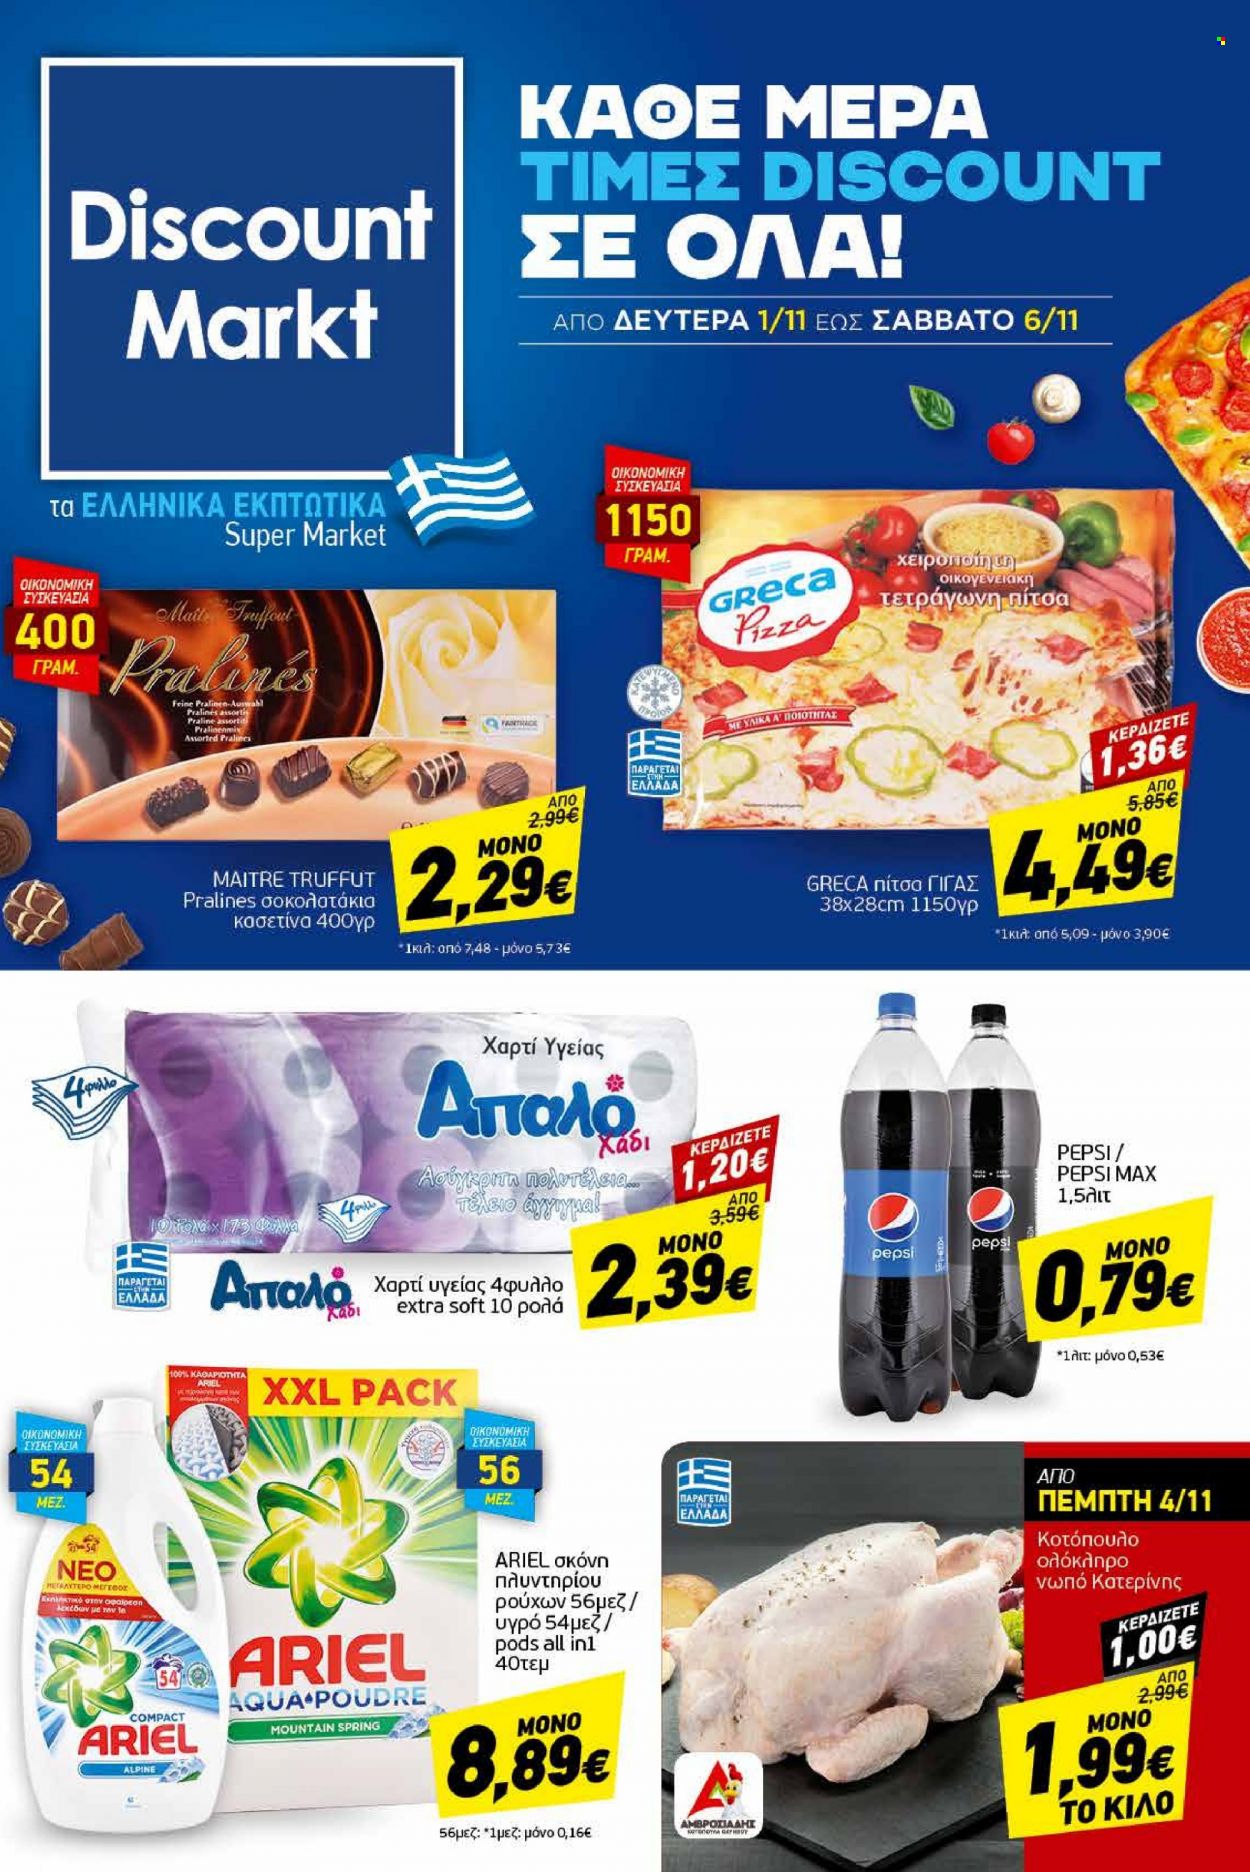 thumbnail - Φυλλάδια Discount Markt - 01.11.2021 - 06.11.2021 - Εκπτωτικά προϊόντα - κοτόπουλο, πίτσα, πραλίνες, Pepsi, χαρτί υγείας, Ariel, σκόνη πλυντηρίου ρούχων. Σελίδα 1.